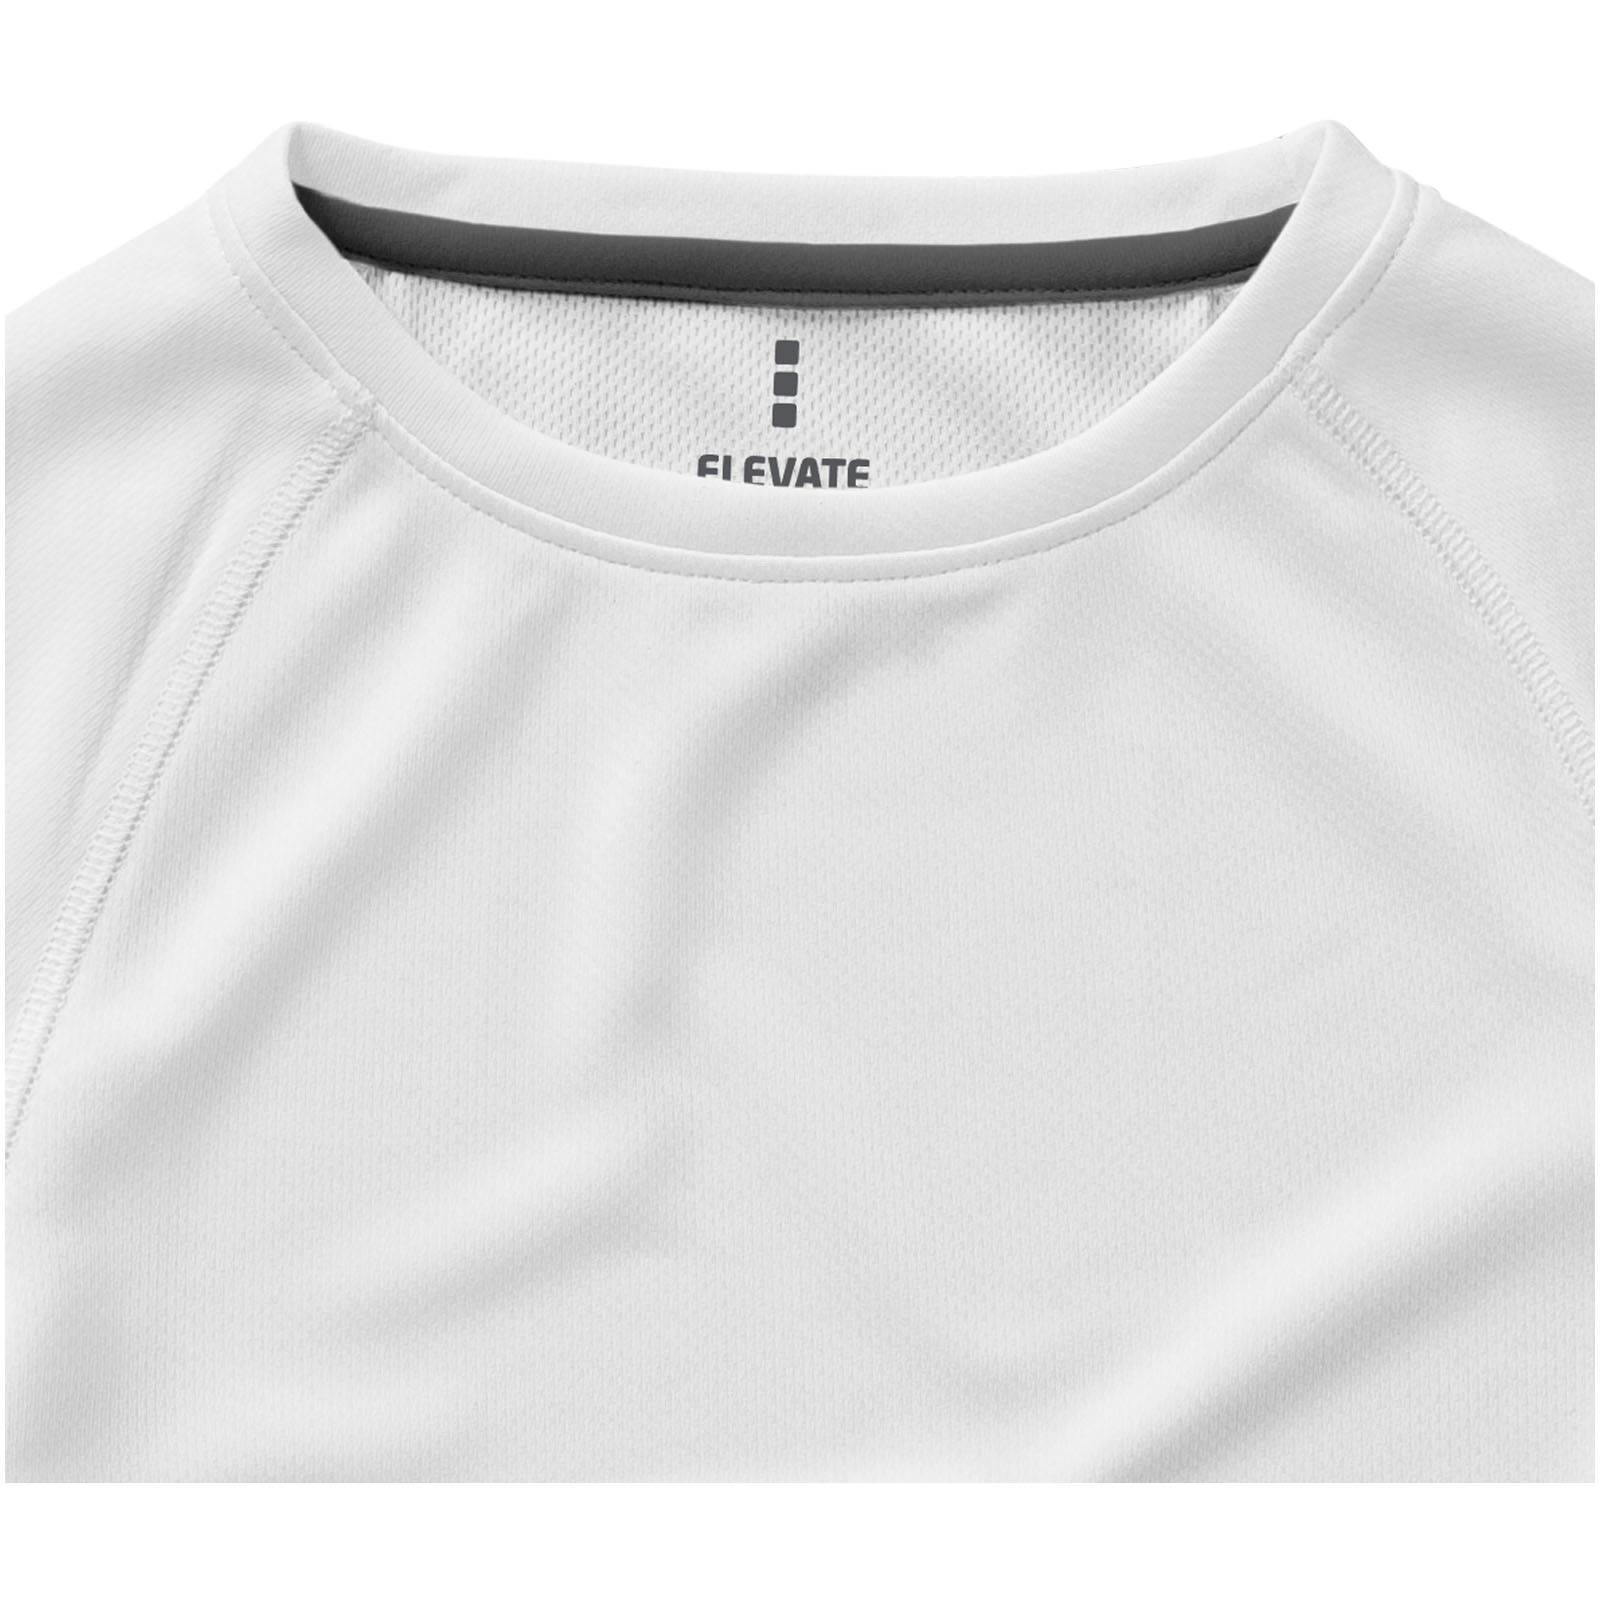 Advertising T-shirts - Niagara short sleeve men's cool fit t-shirt - 4